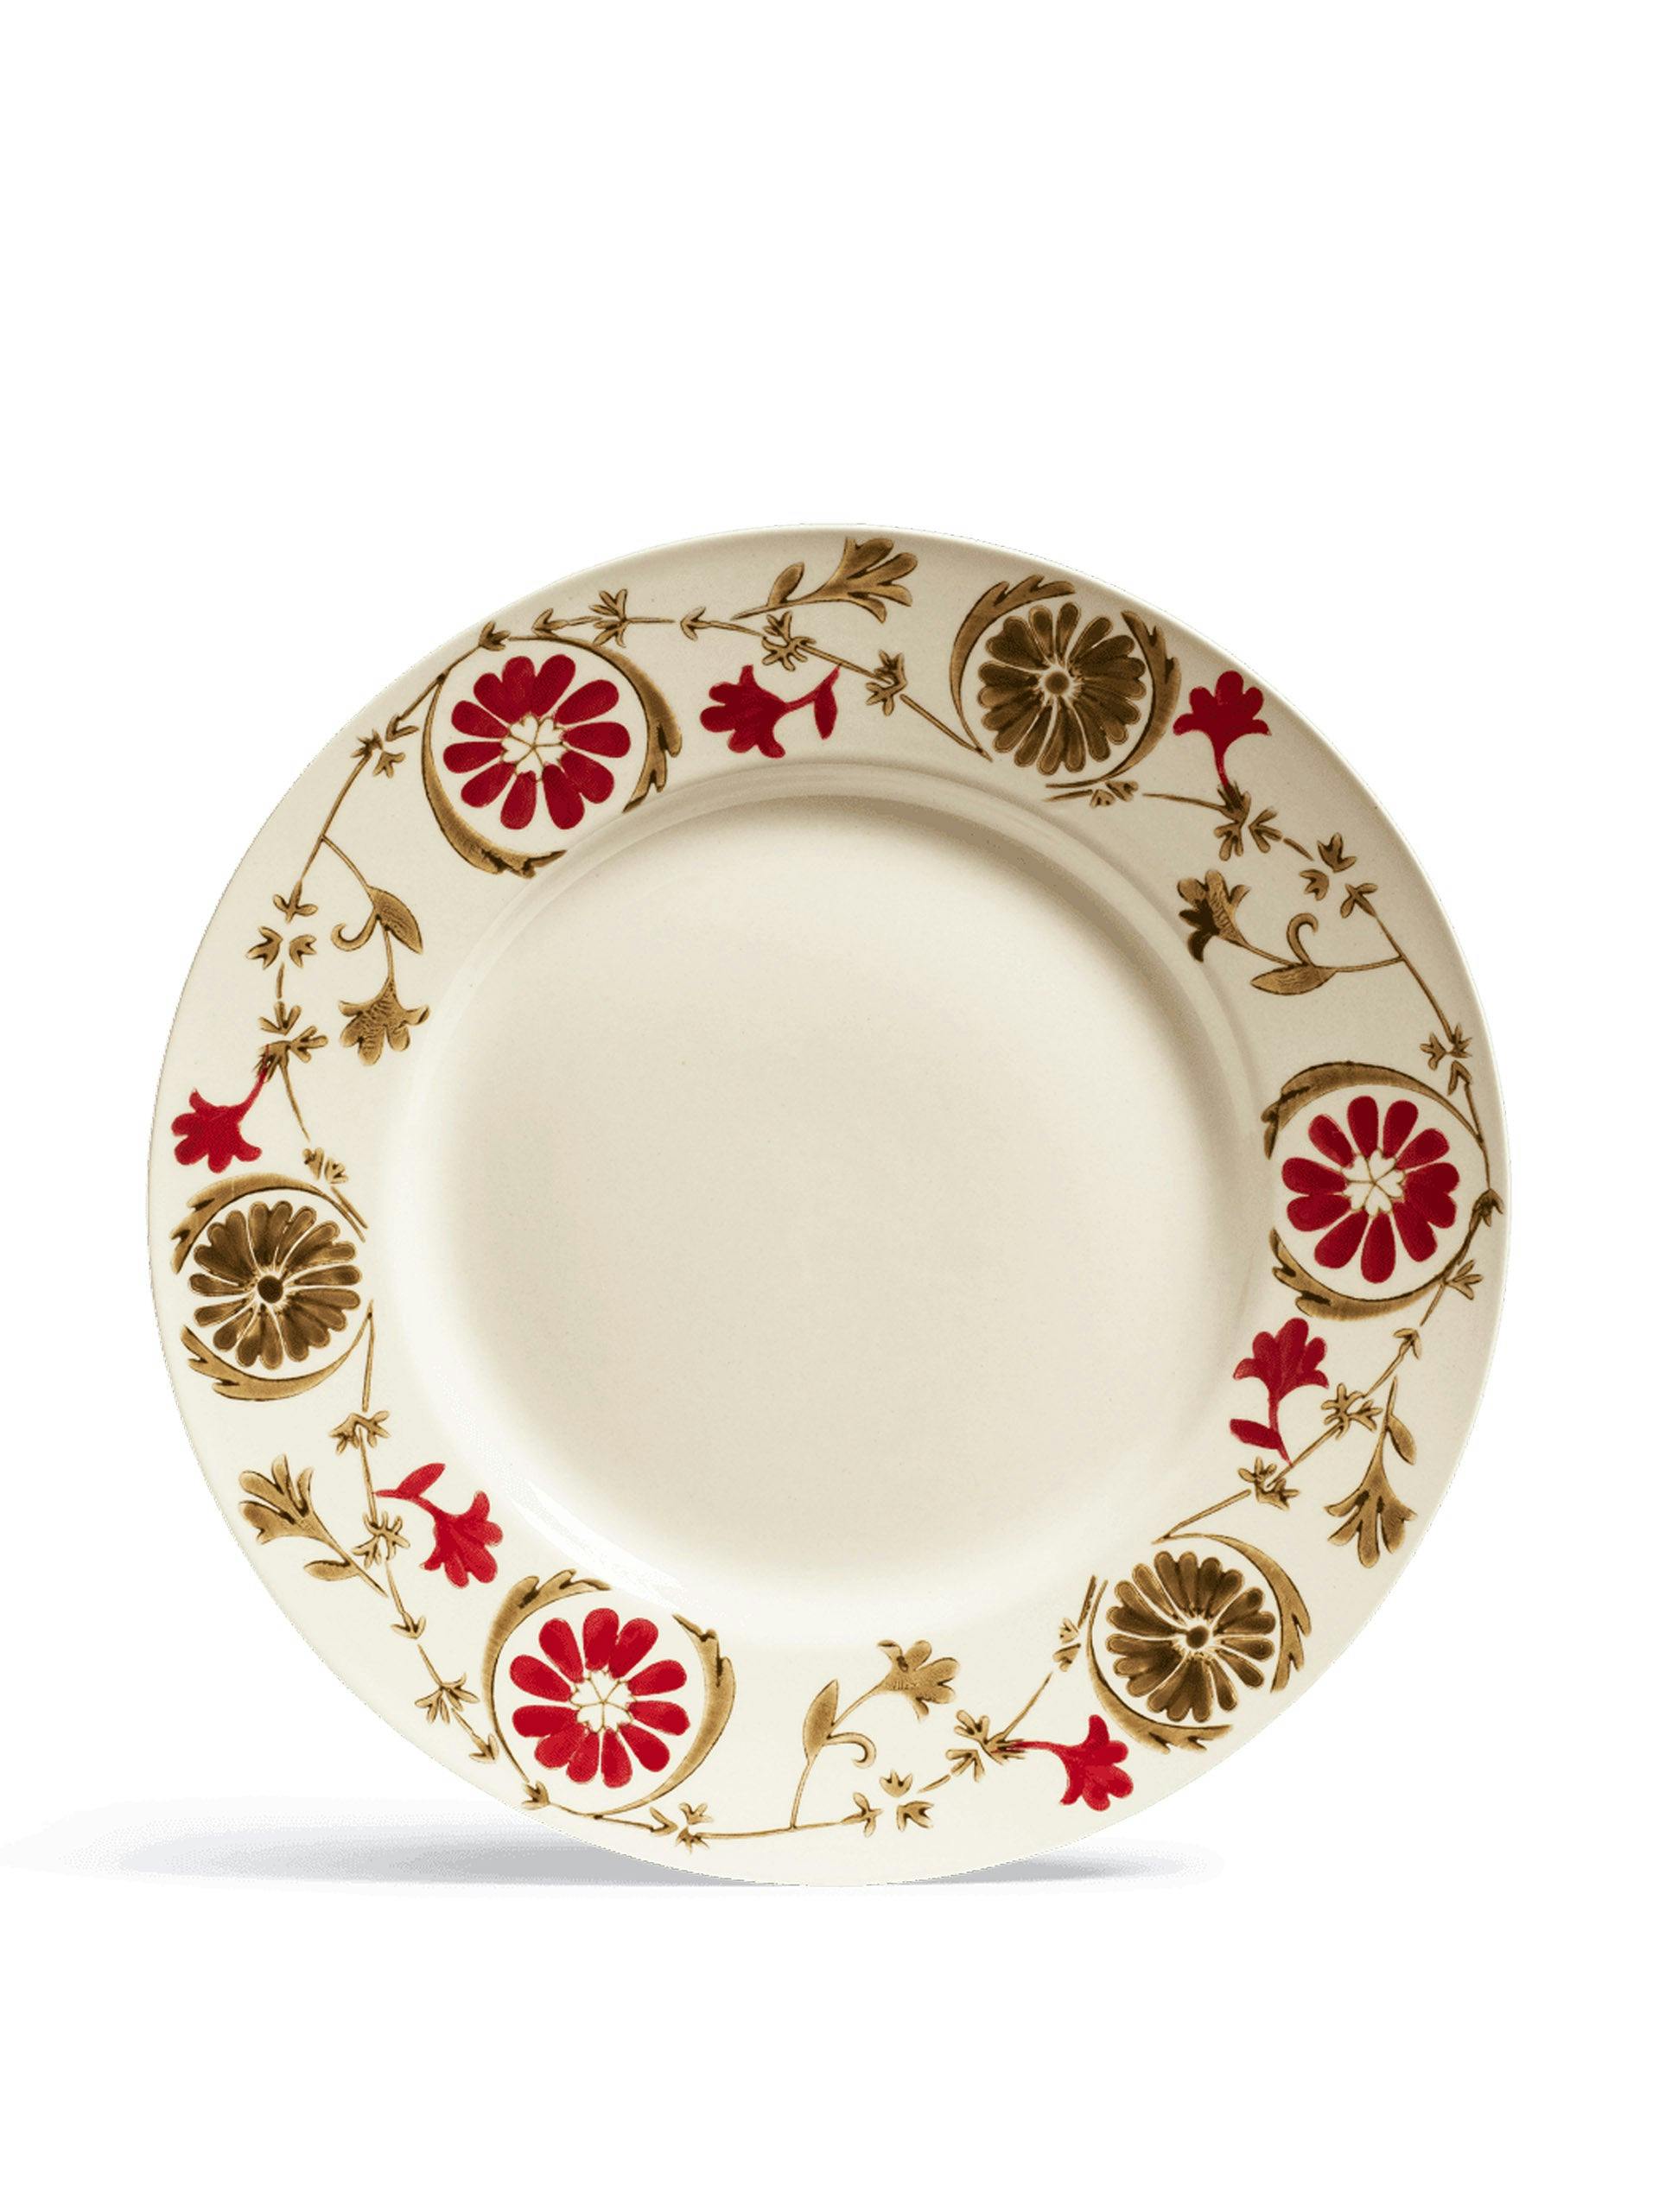 Sheki dinner plates (set of 6)